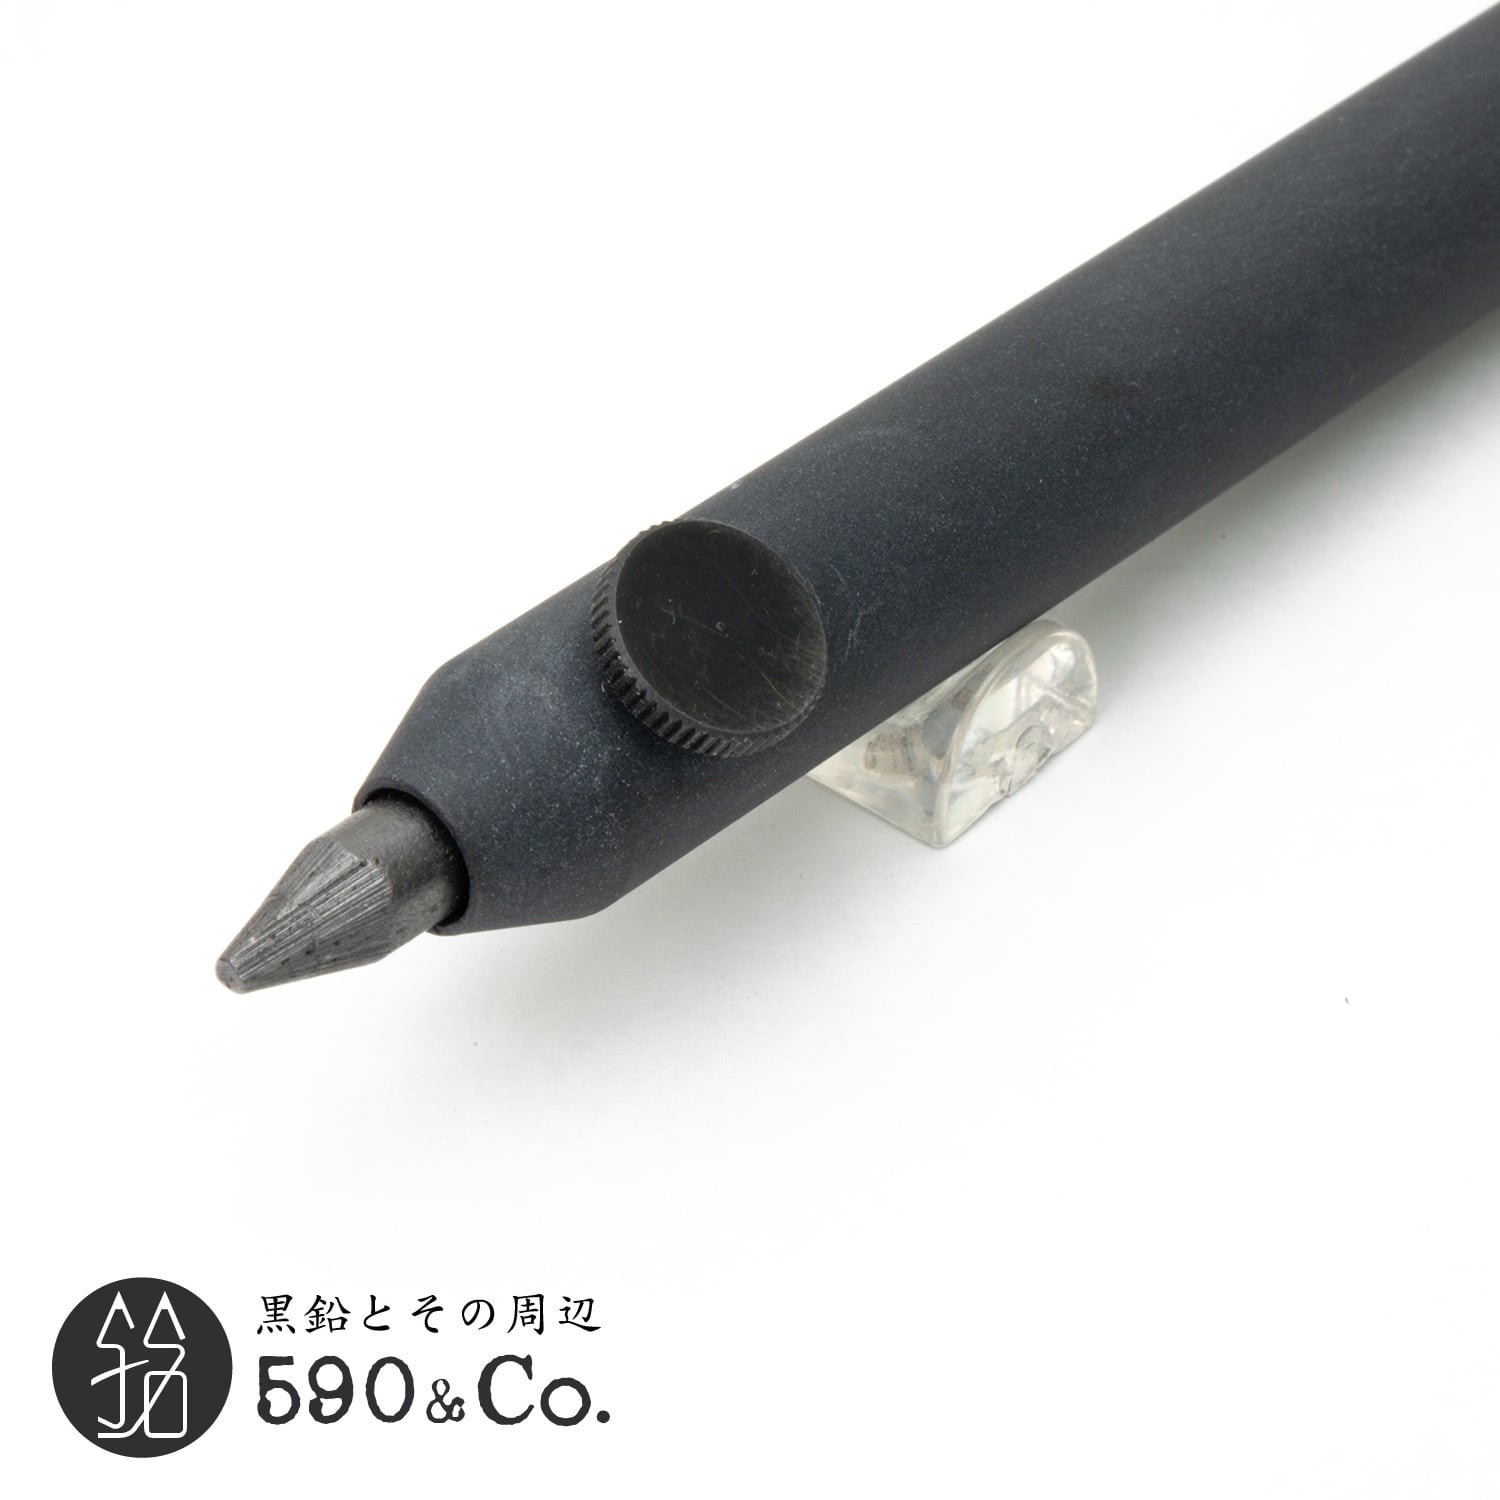 【PARAFERNALIA × Internoitaliano】 Neri Mechanical Pencil 5.5ミリ芯ホルダー (ブラック)  590Co.